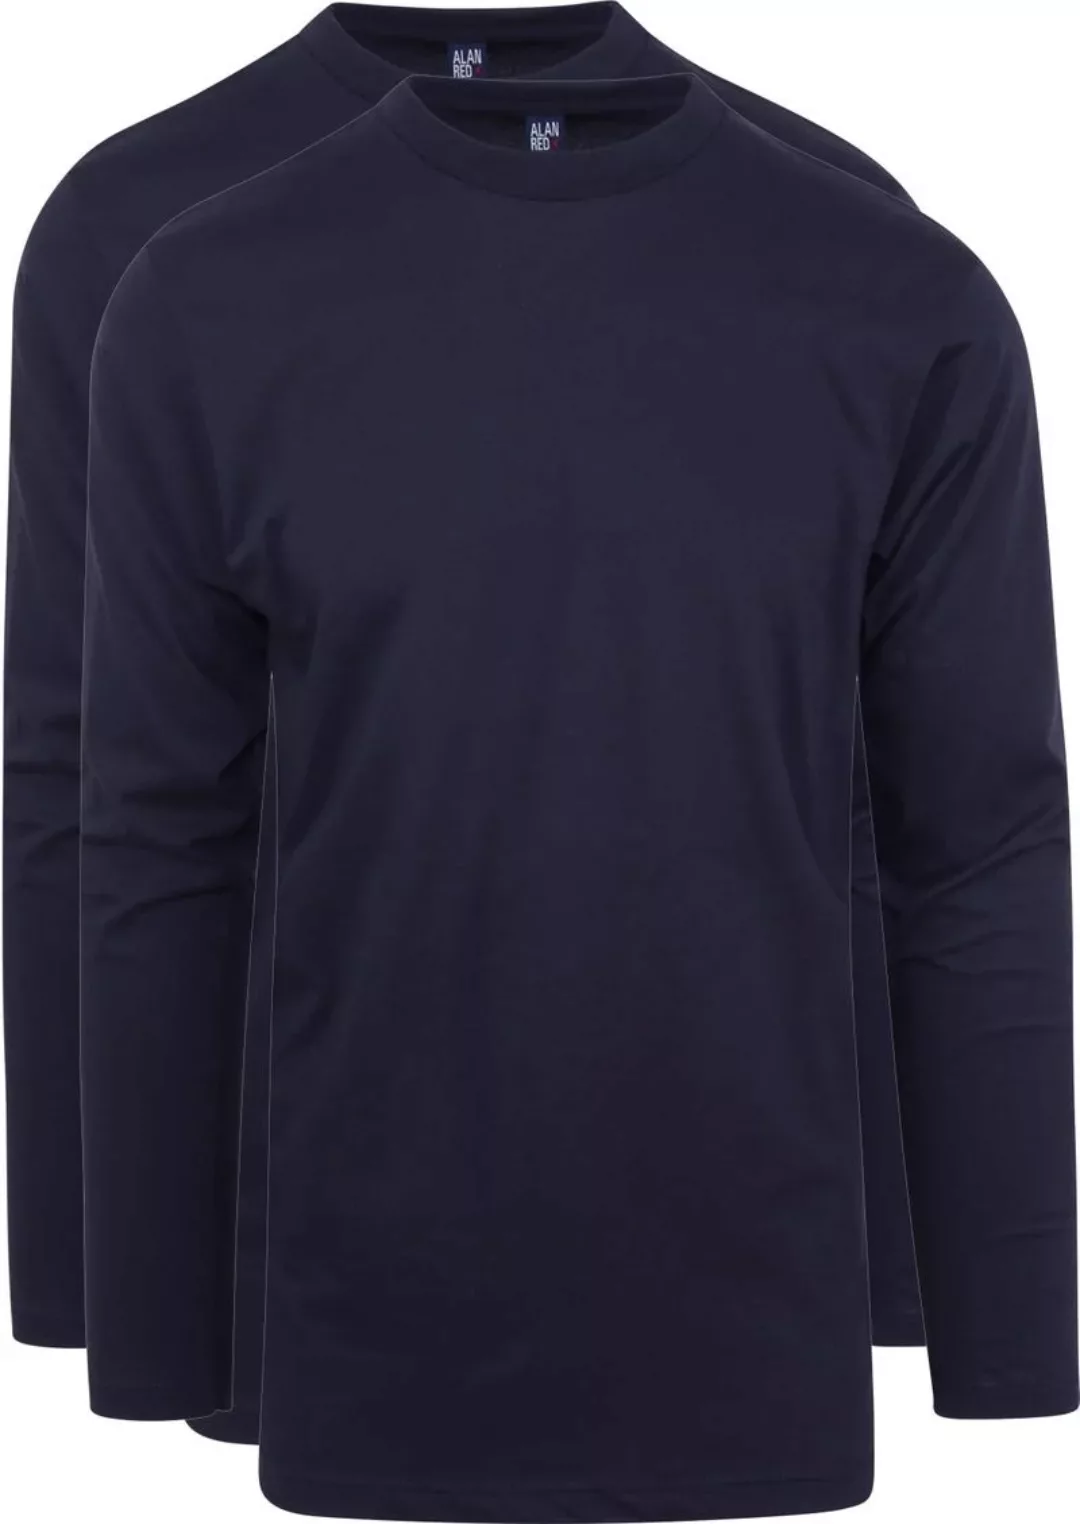 Alan Red T-Shirt Virginia Navy Longsleeve 2-pack - Größe M günstig online kaufen